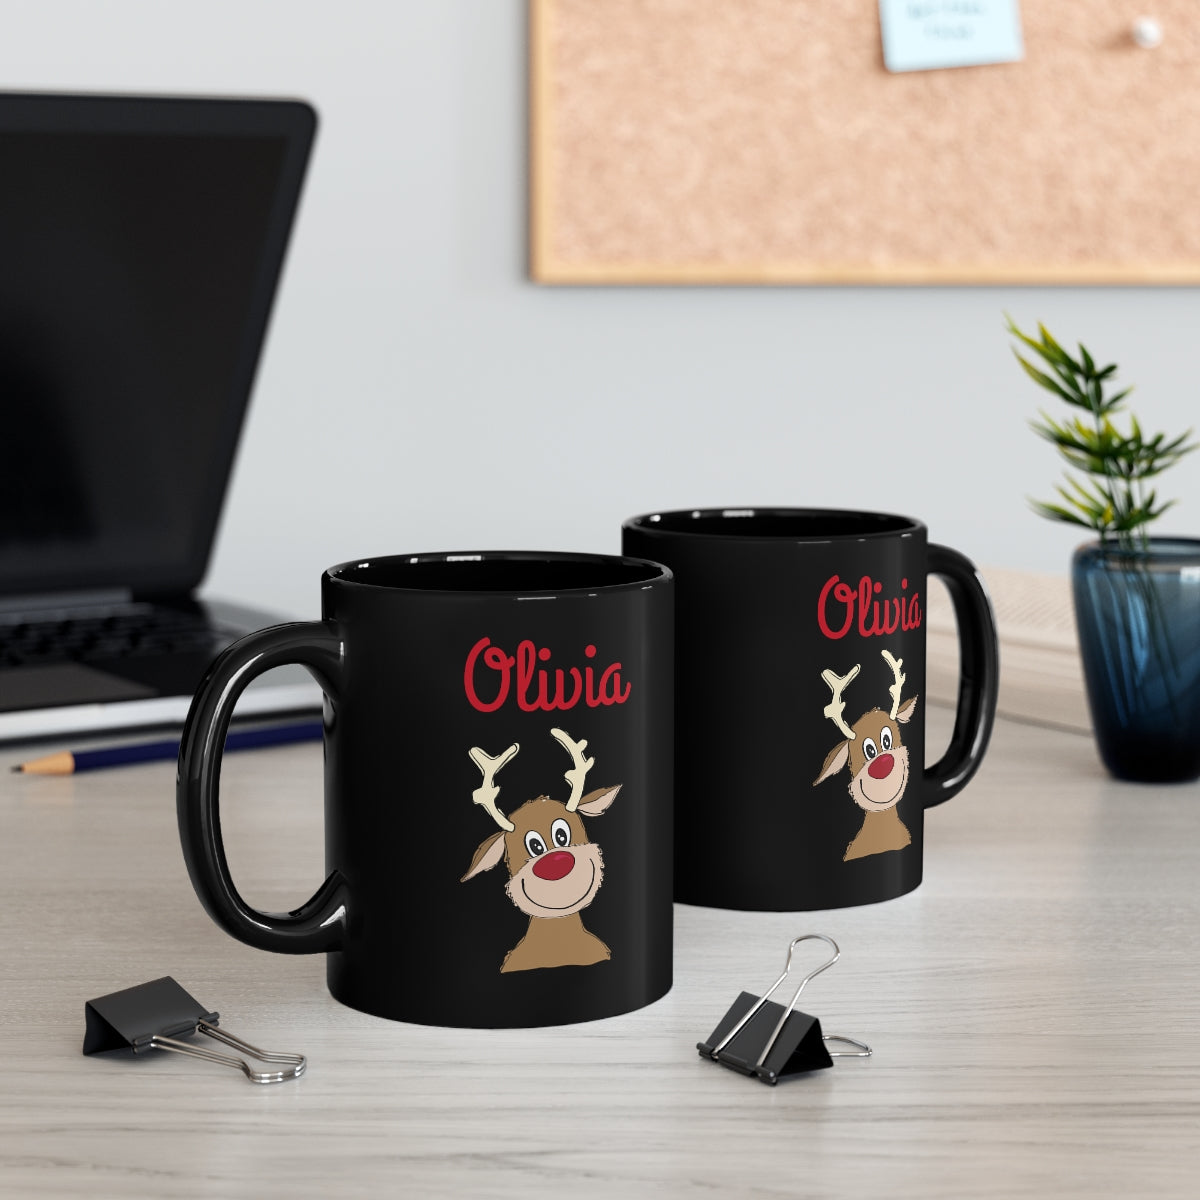 Reindeer Mug / Personalized Mug / Cute Reindeer Mug